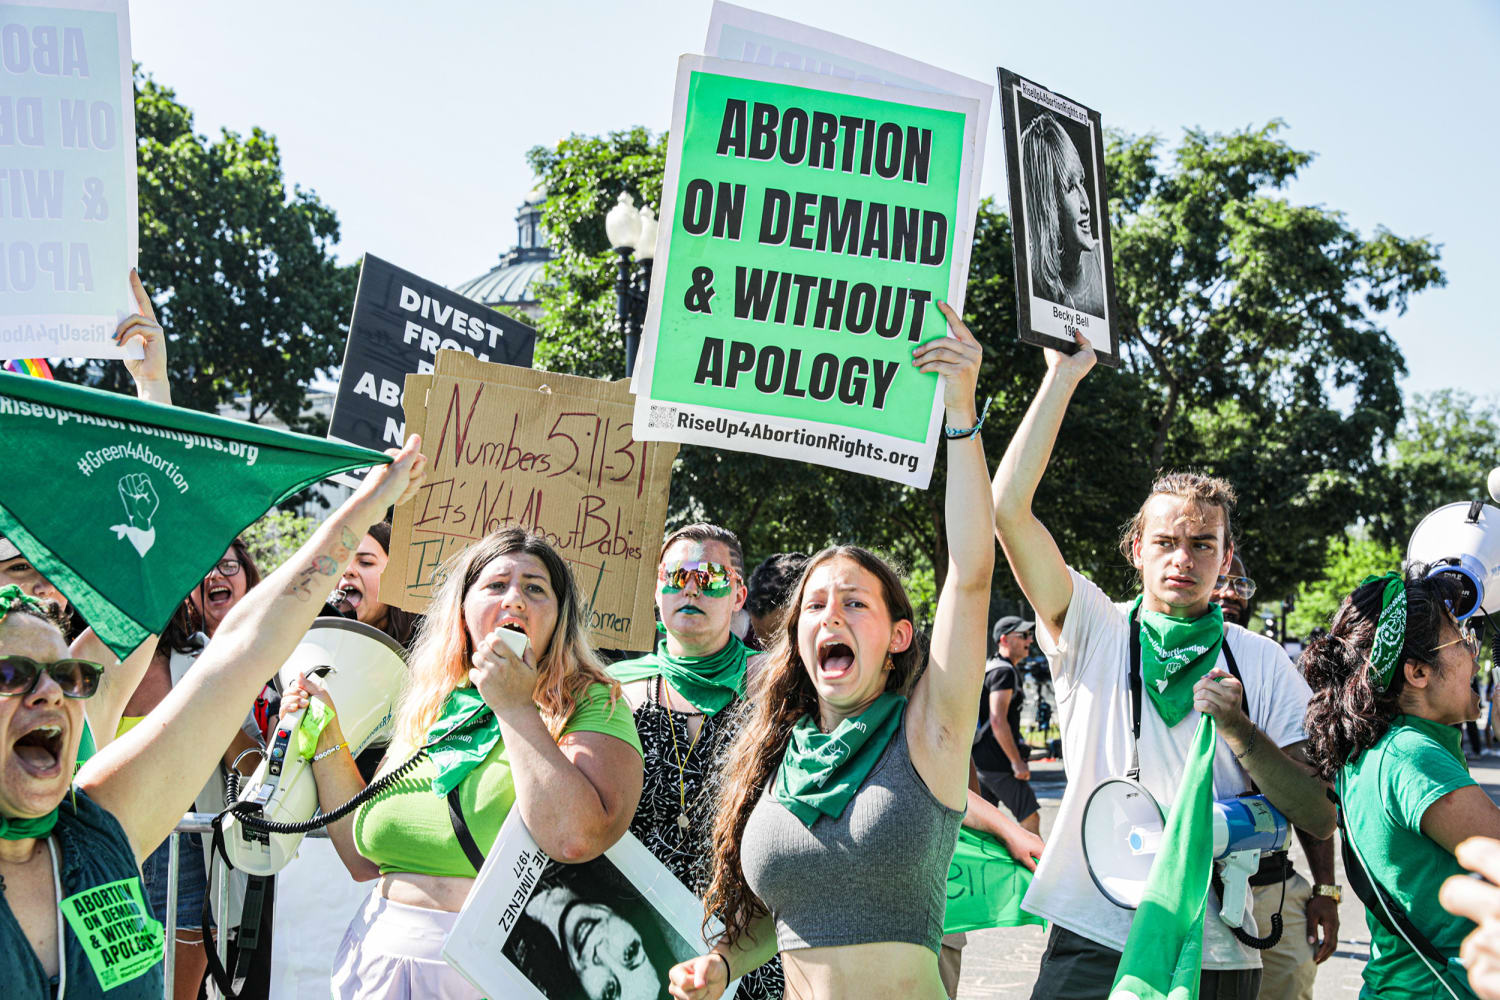 Louisiana woman denied abortion wants 'vague' ban clarified